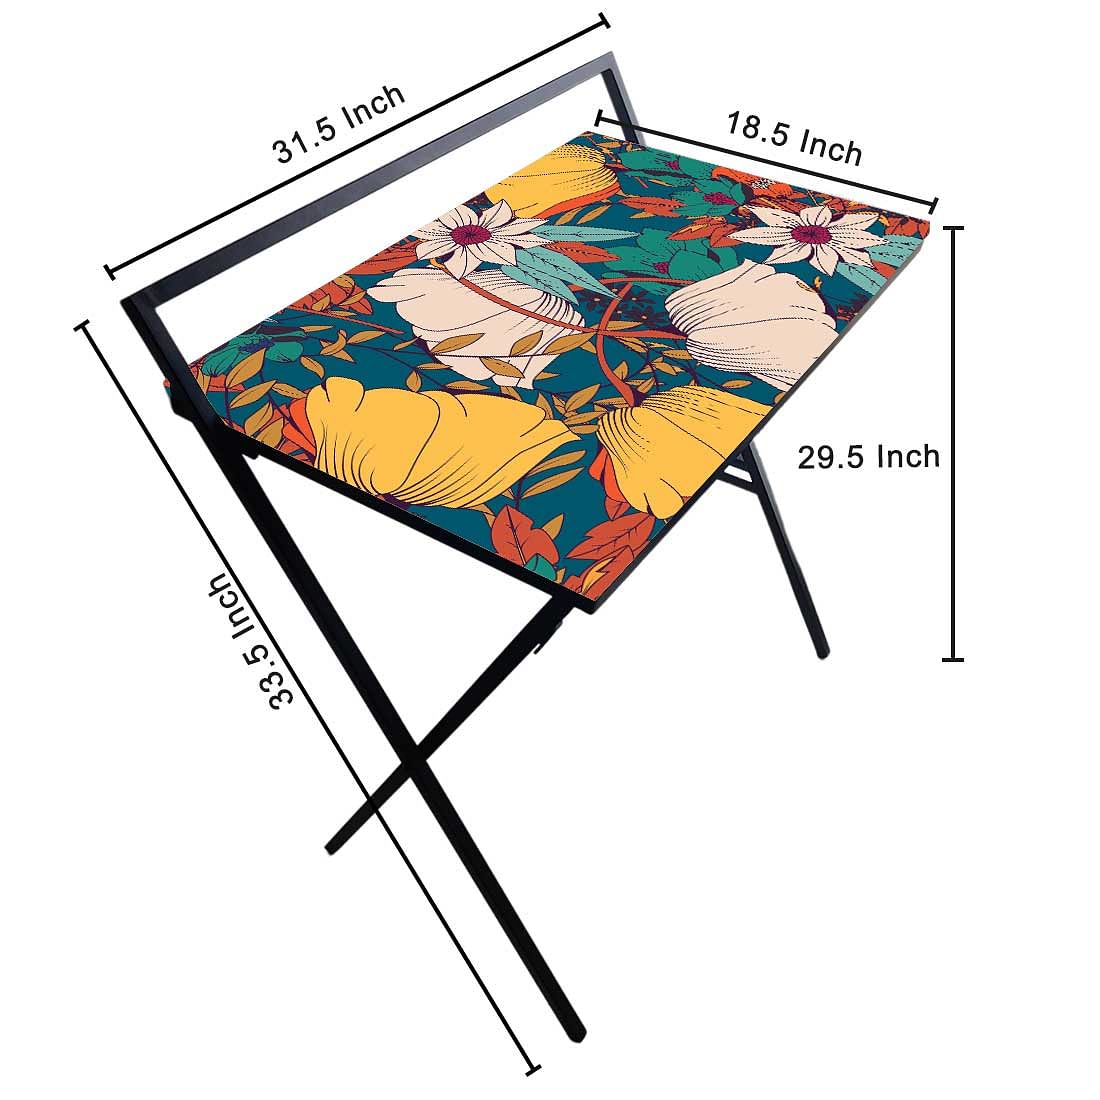 Foldable Working Table for Home Bedroom  - Elegance Nutcase